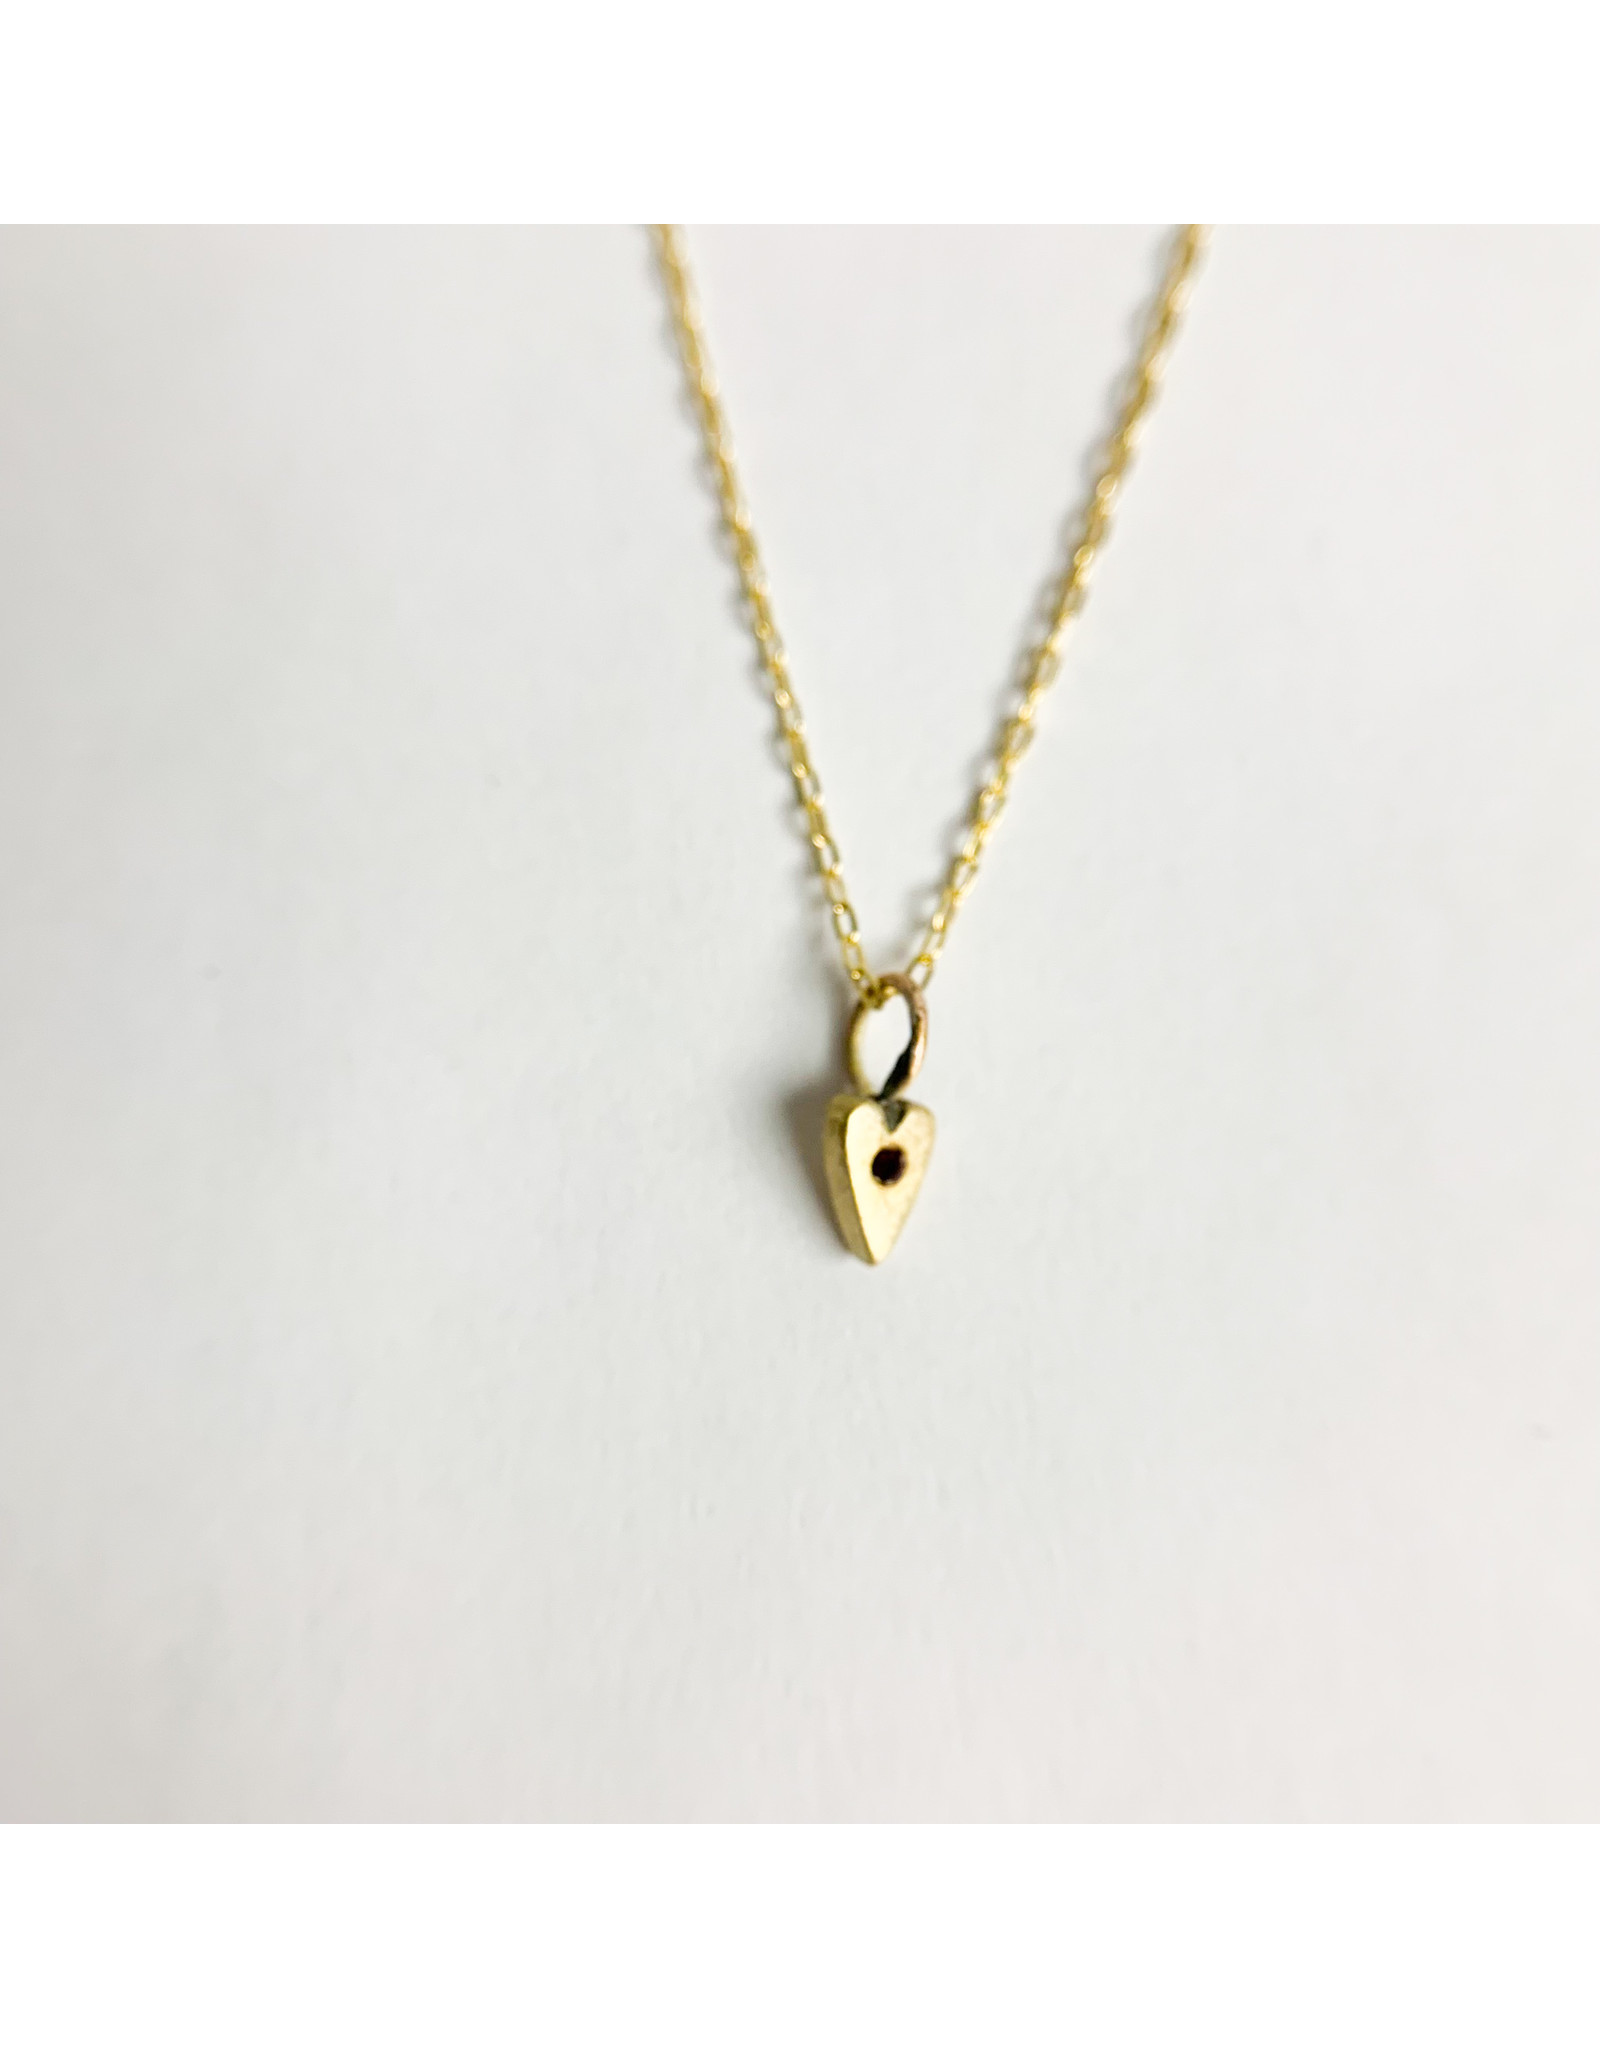 Penny Larsen April Necklace/ Diamond Gold Chain Birthstone